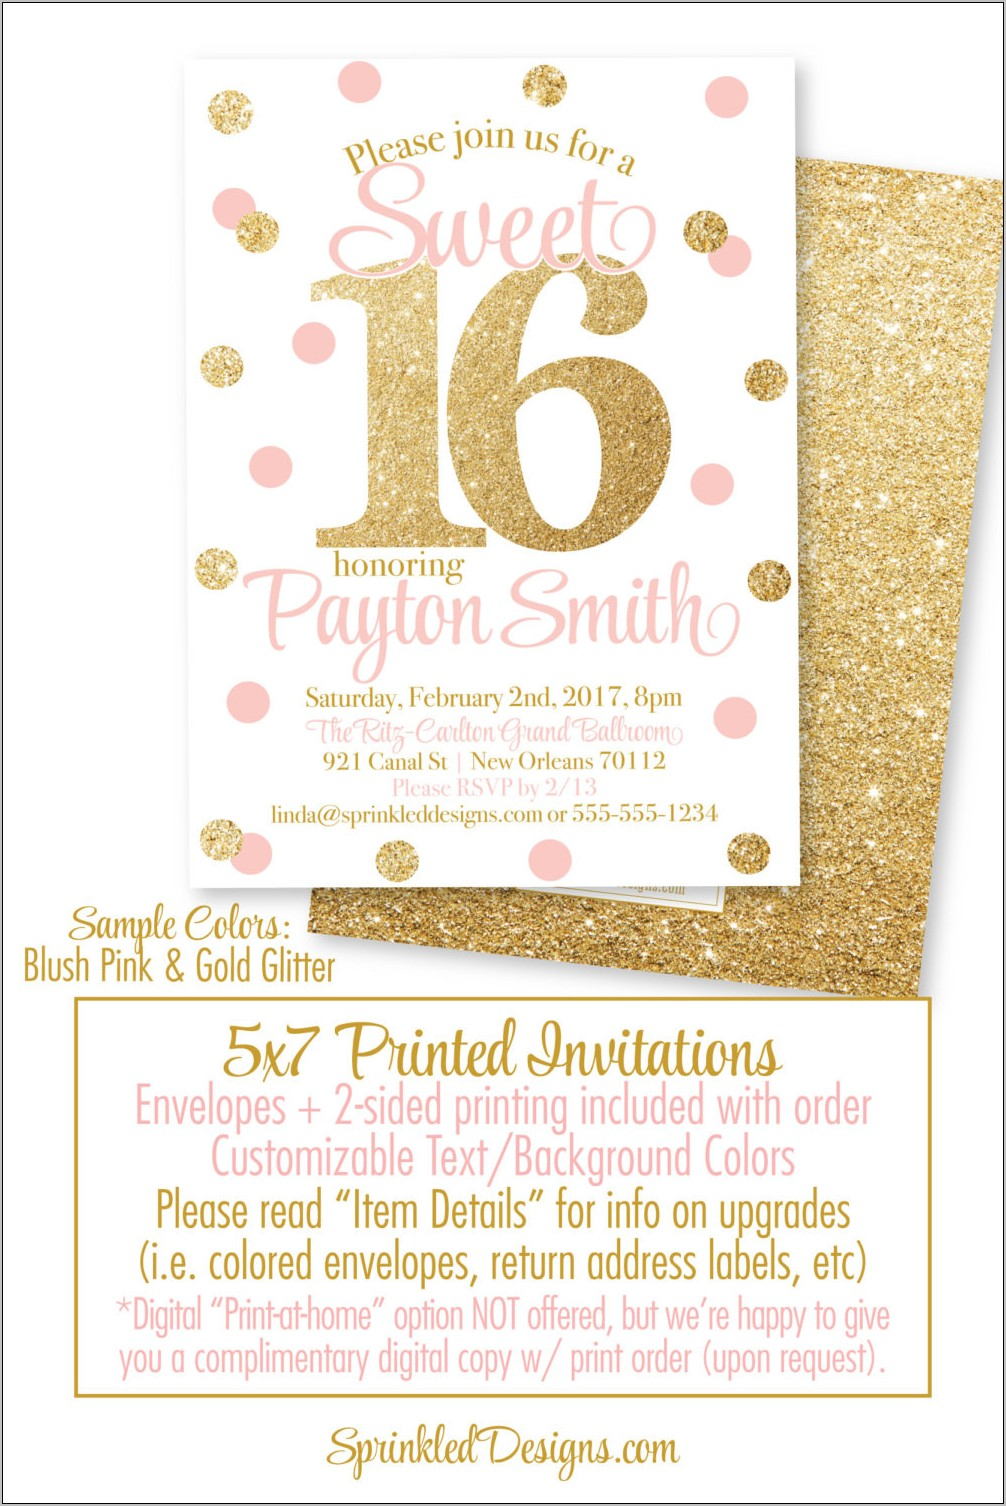 Sweet 16 Invitation Templates